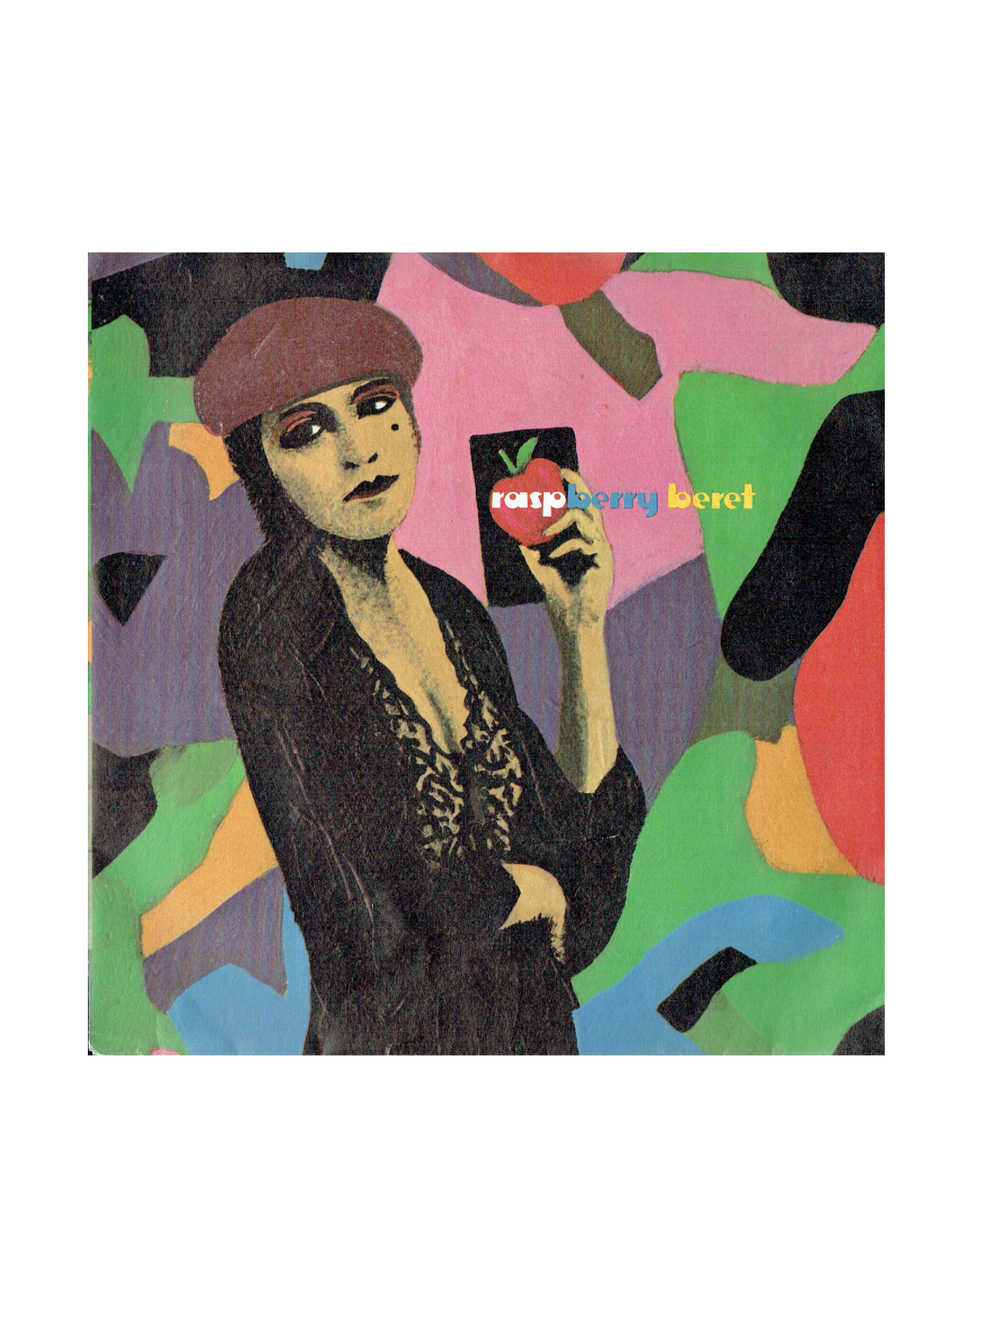 Prince – & The Revolution - Raspberry Beret Vinyl 7" Single UK Preloved: 1985